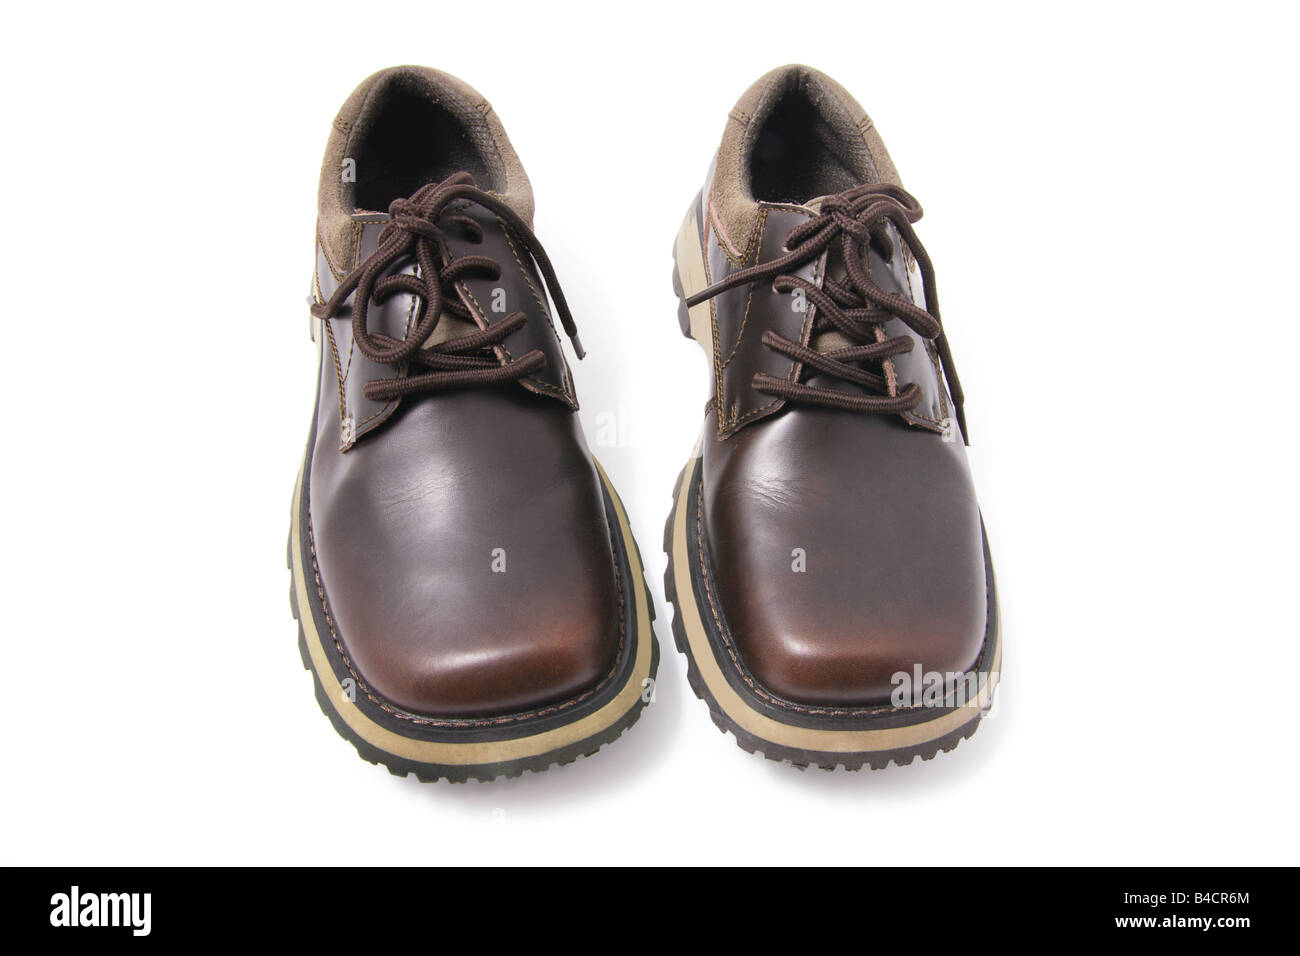 Pair of Men's Shoes Stock Photo - Alamy